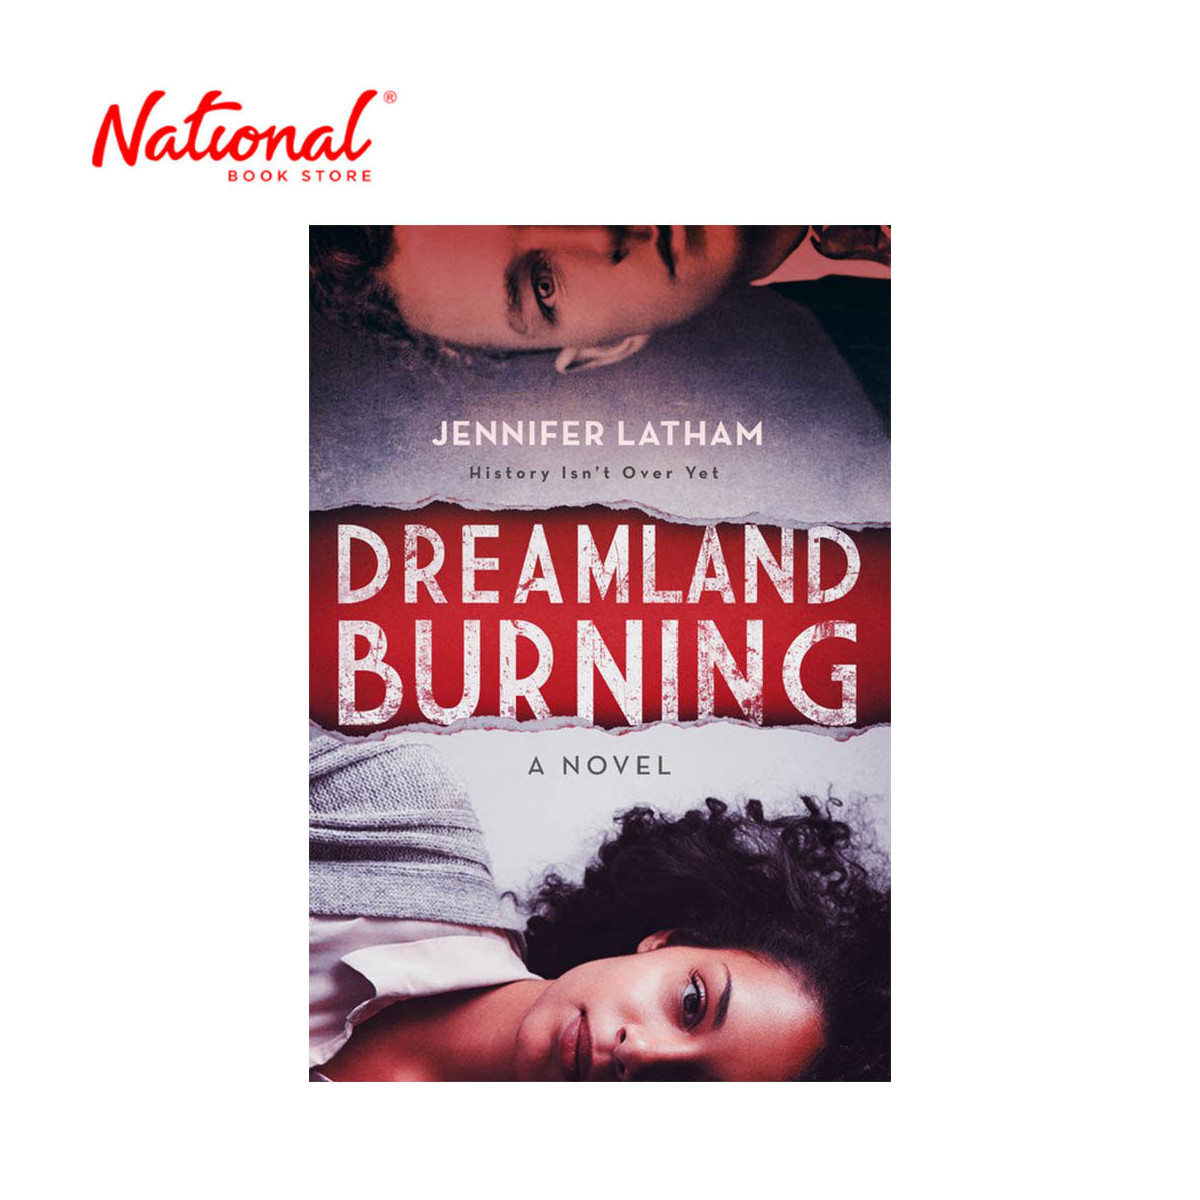 Dreamland Burning by Jennifer Latham - Trade Paperback - Teens Fiction - Romance